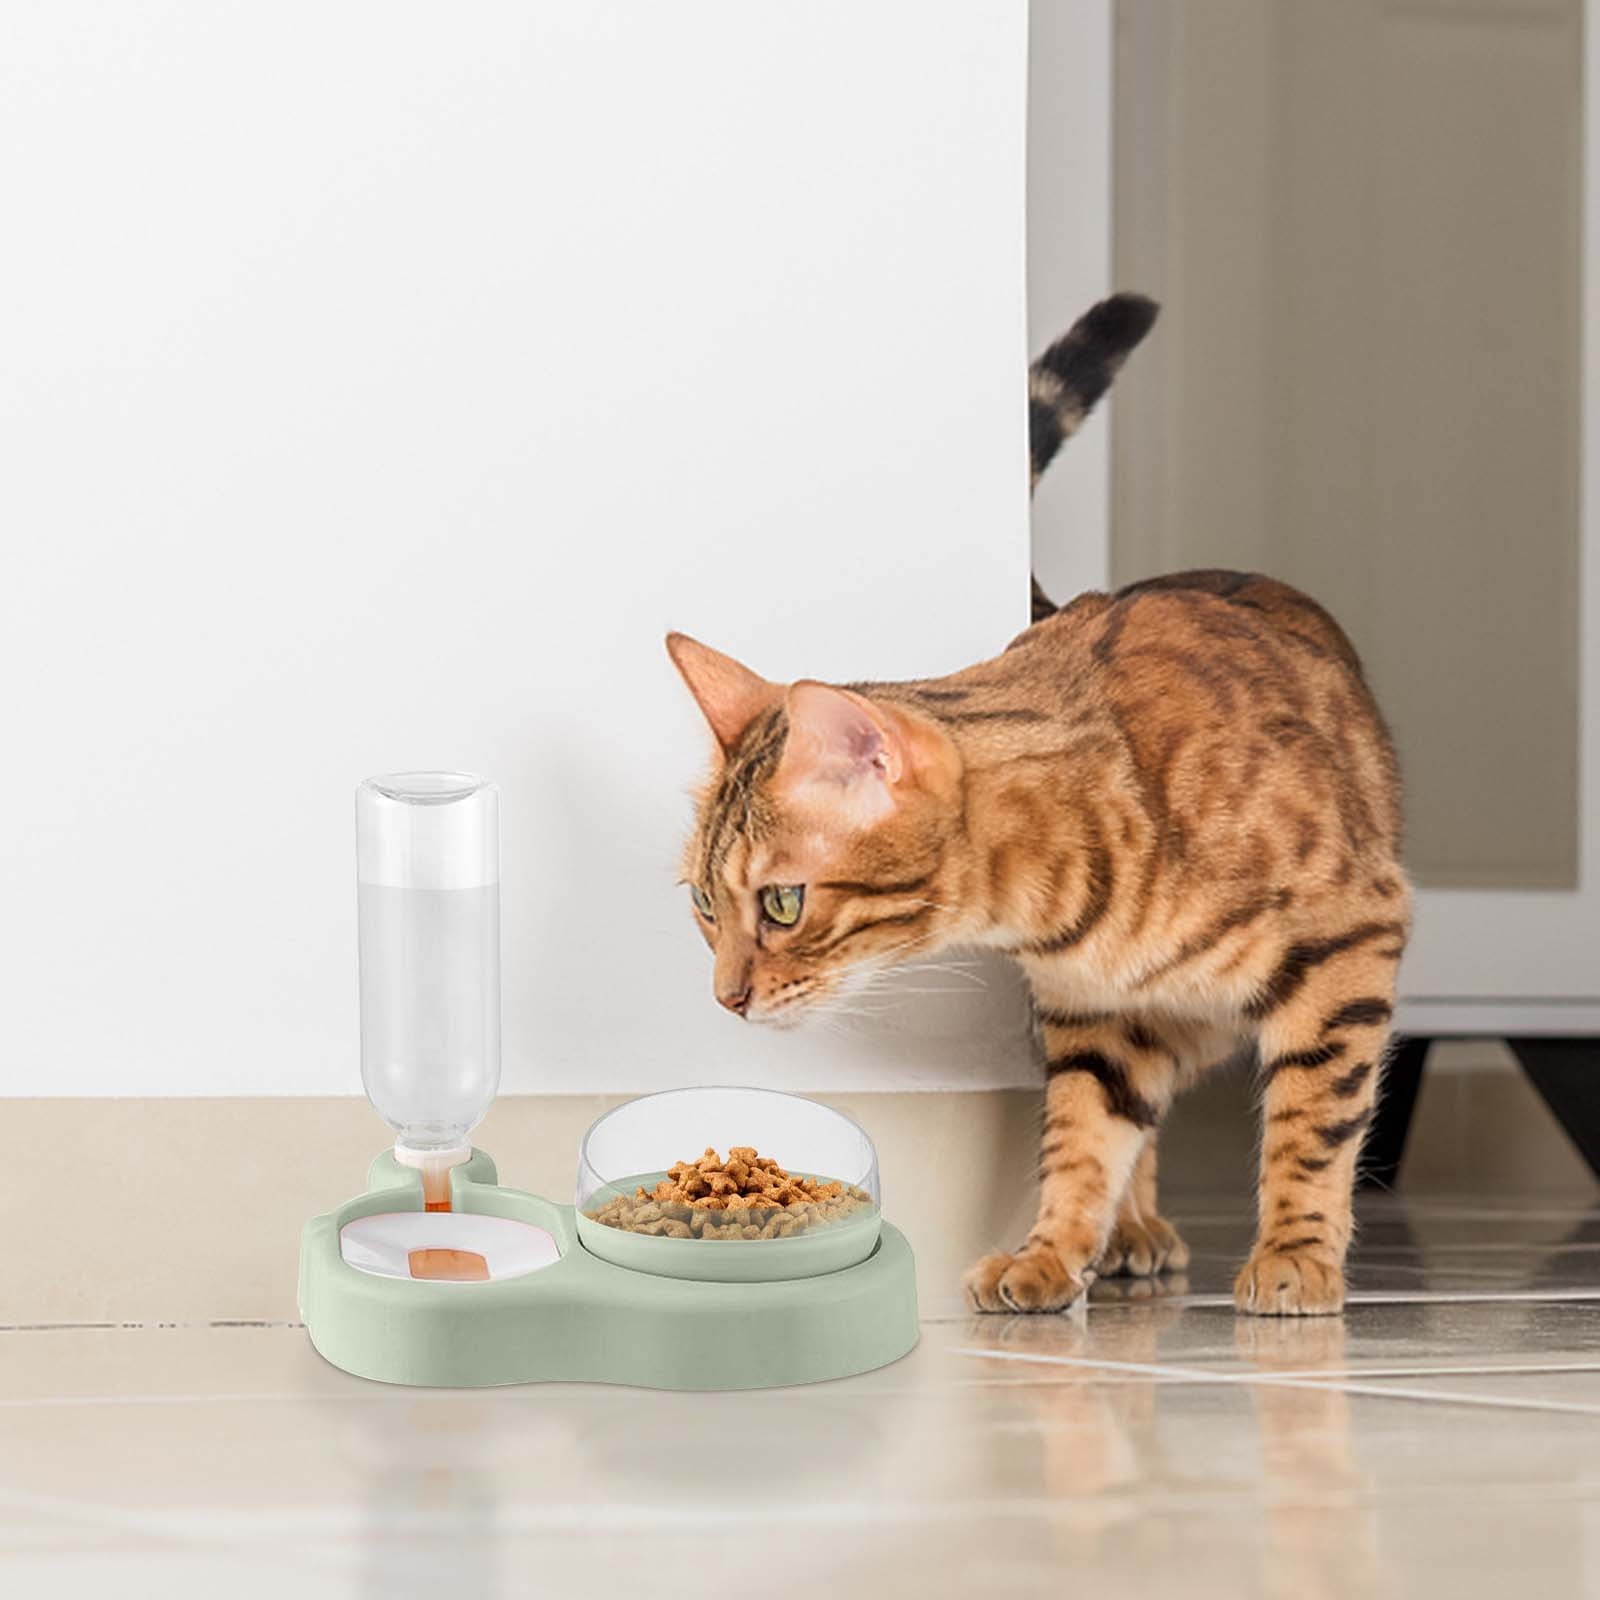 Ptlom Automatic Water Refilling Pet Feeding Bowl, Dog Cat Food